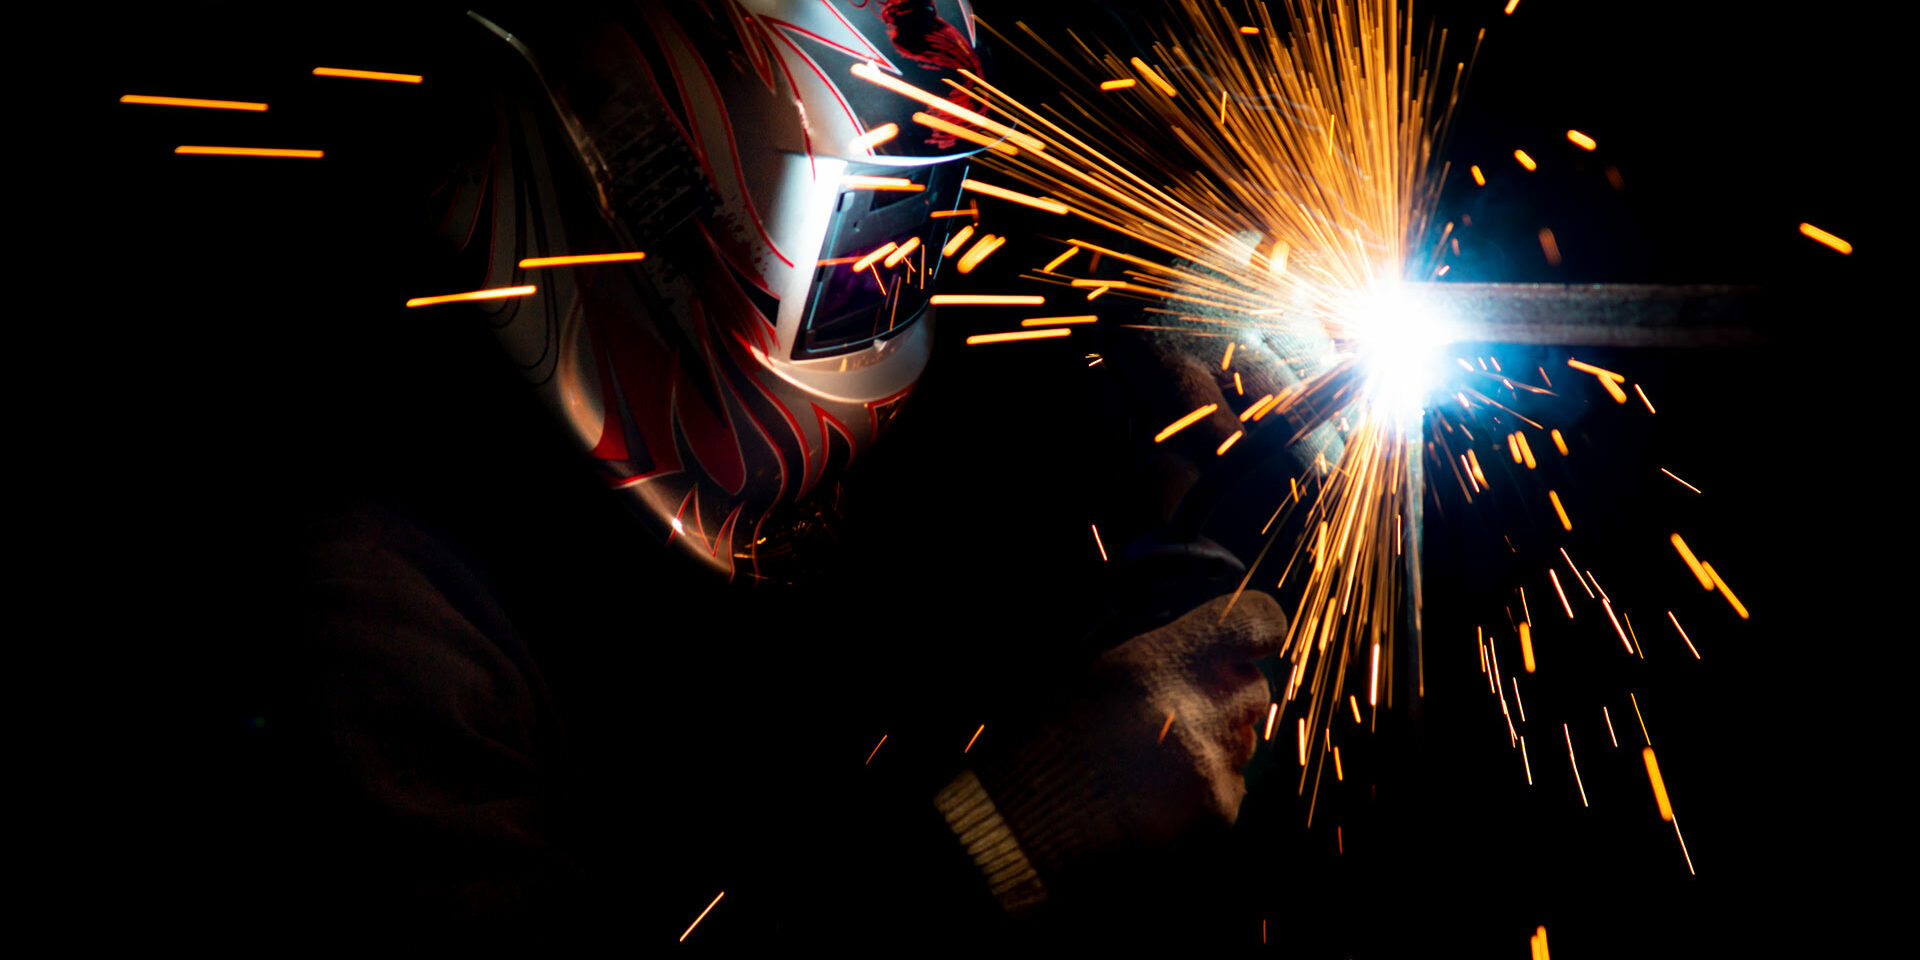 male-welder-mask-performing-metal-welding-photo-dark-colors-sparks-flying